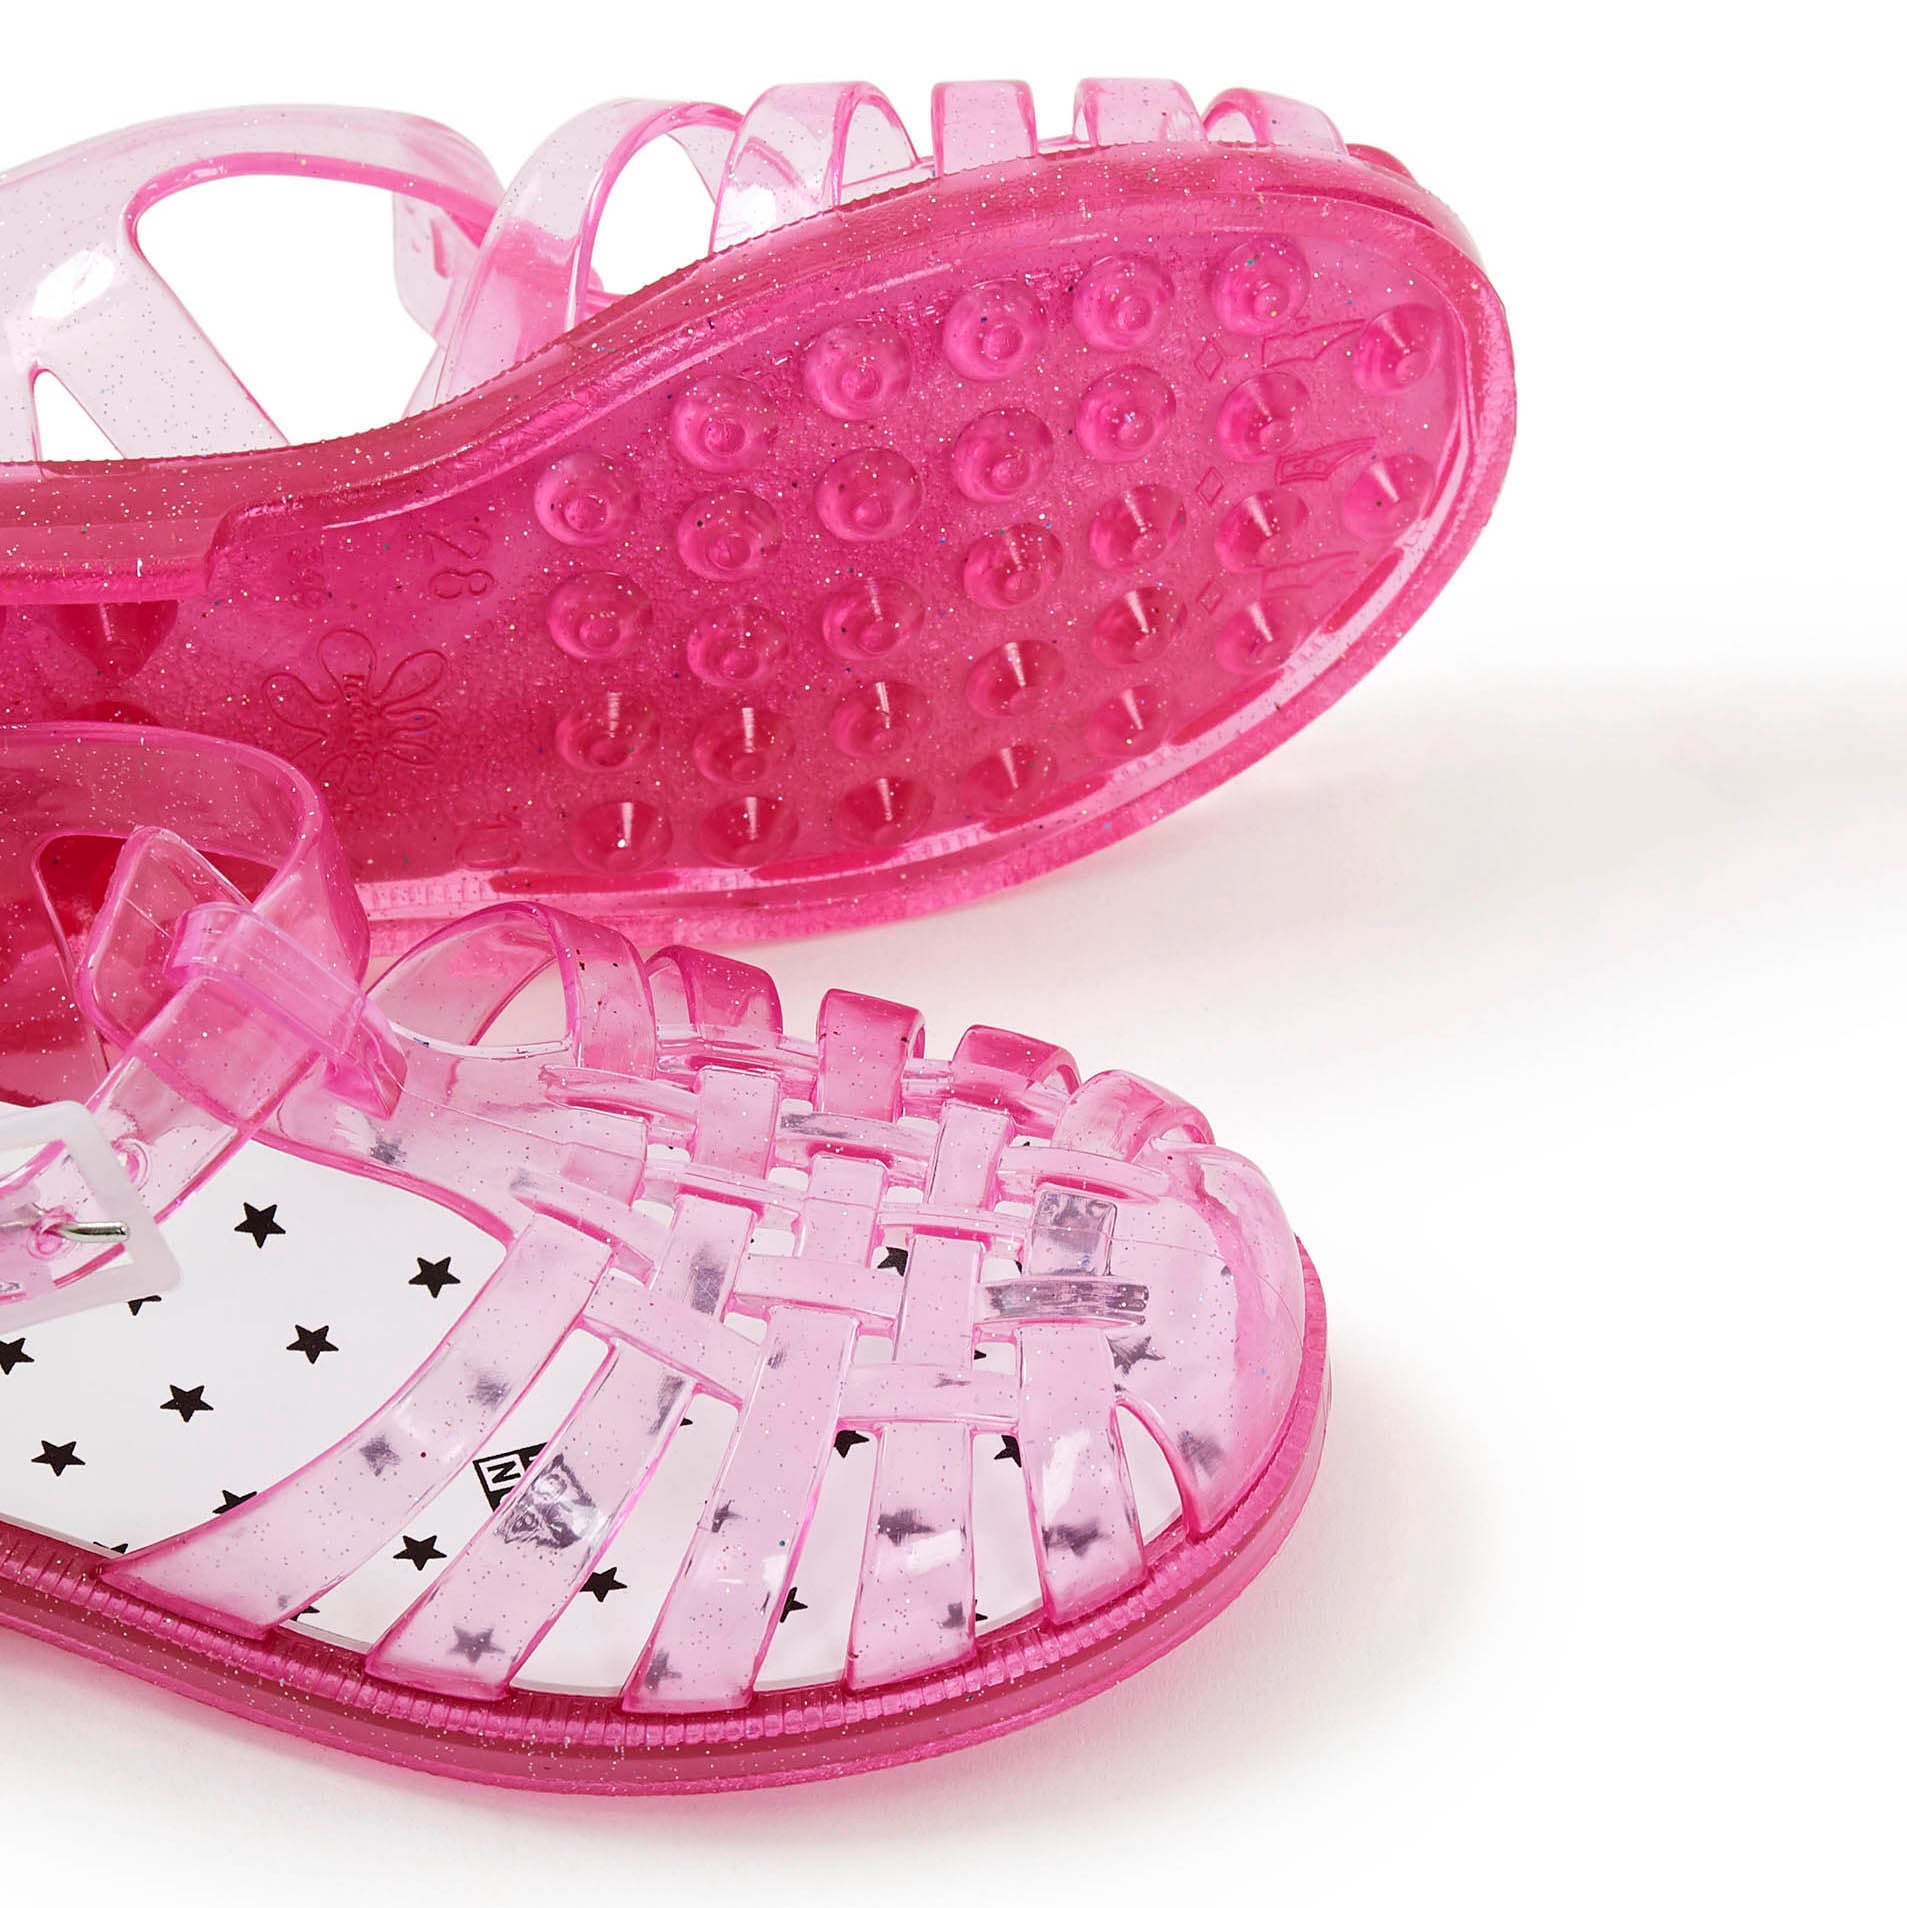 Girls Pink Weave Sandals